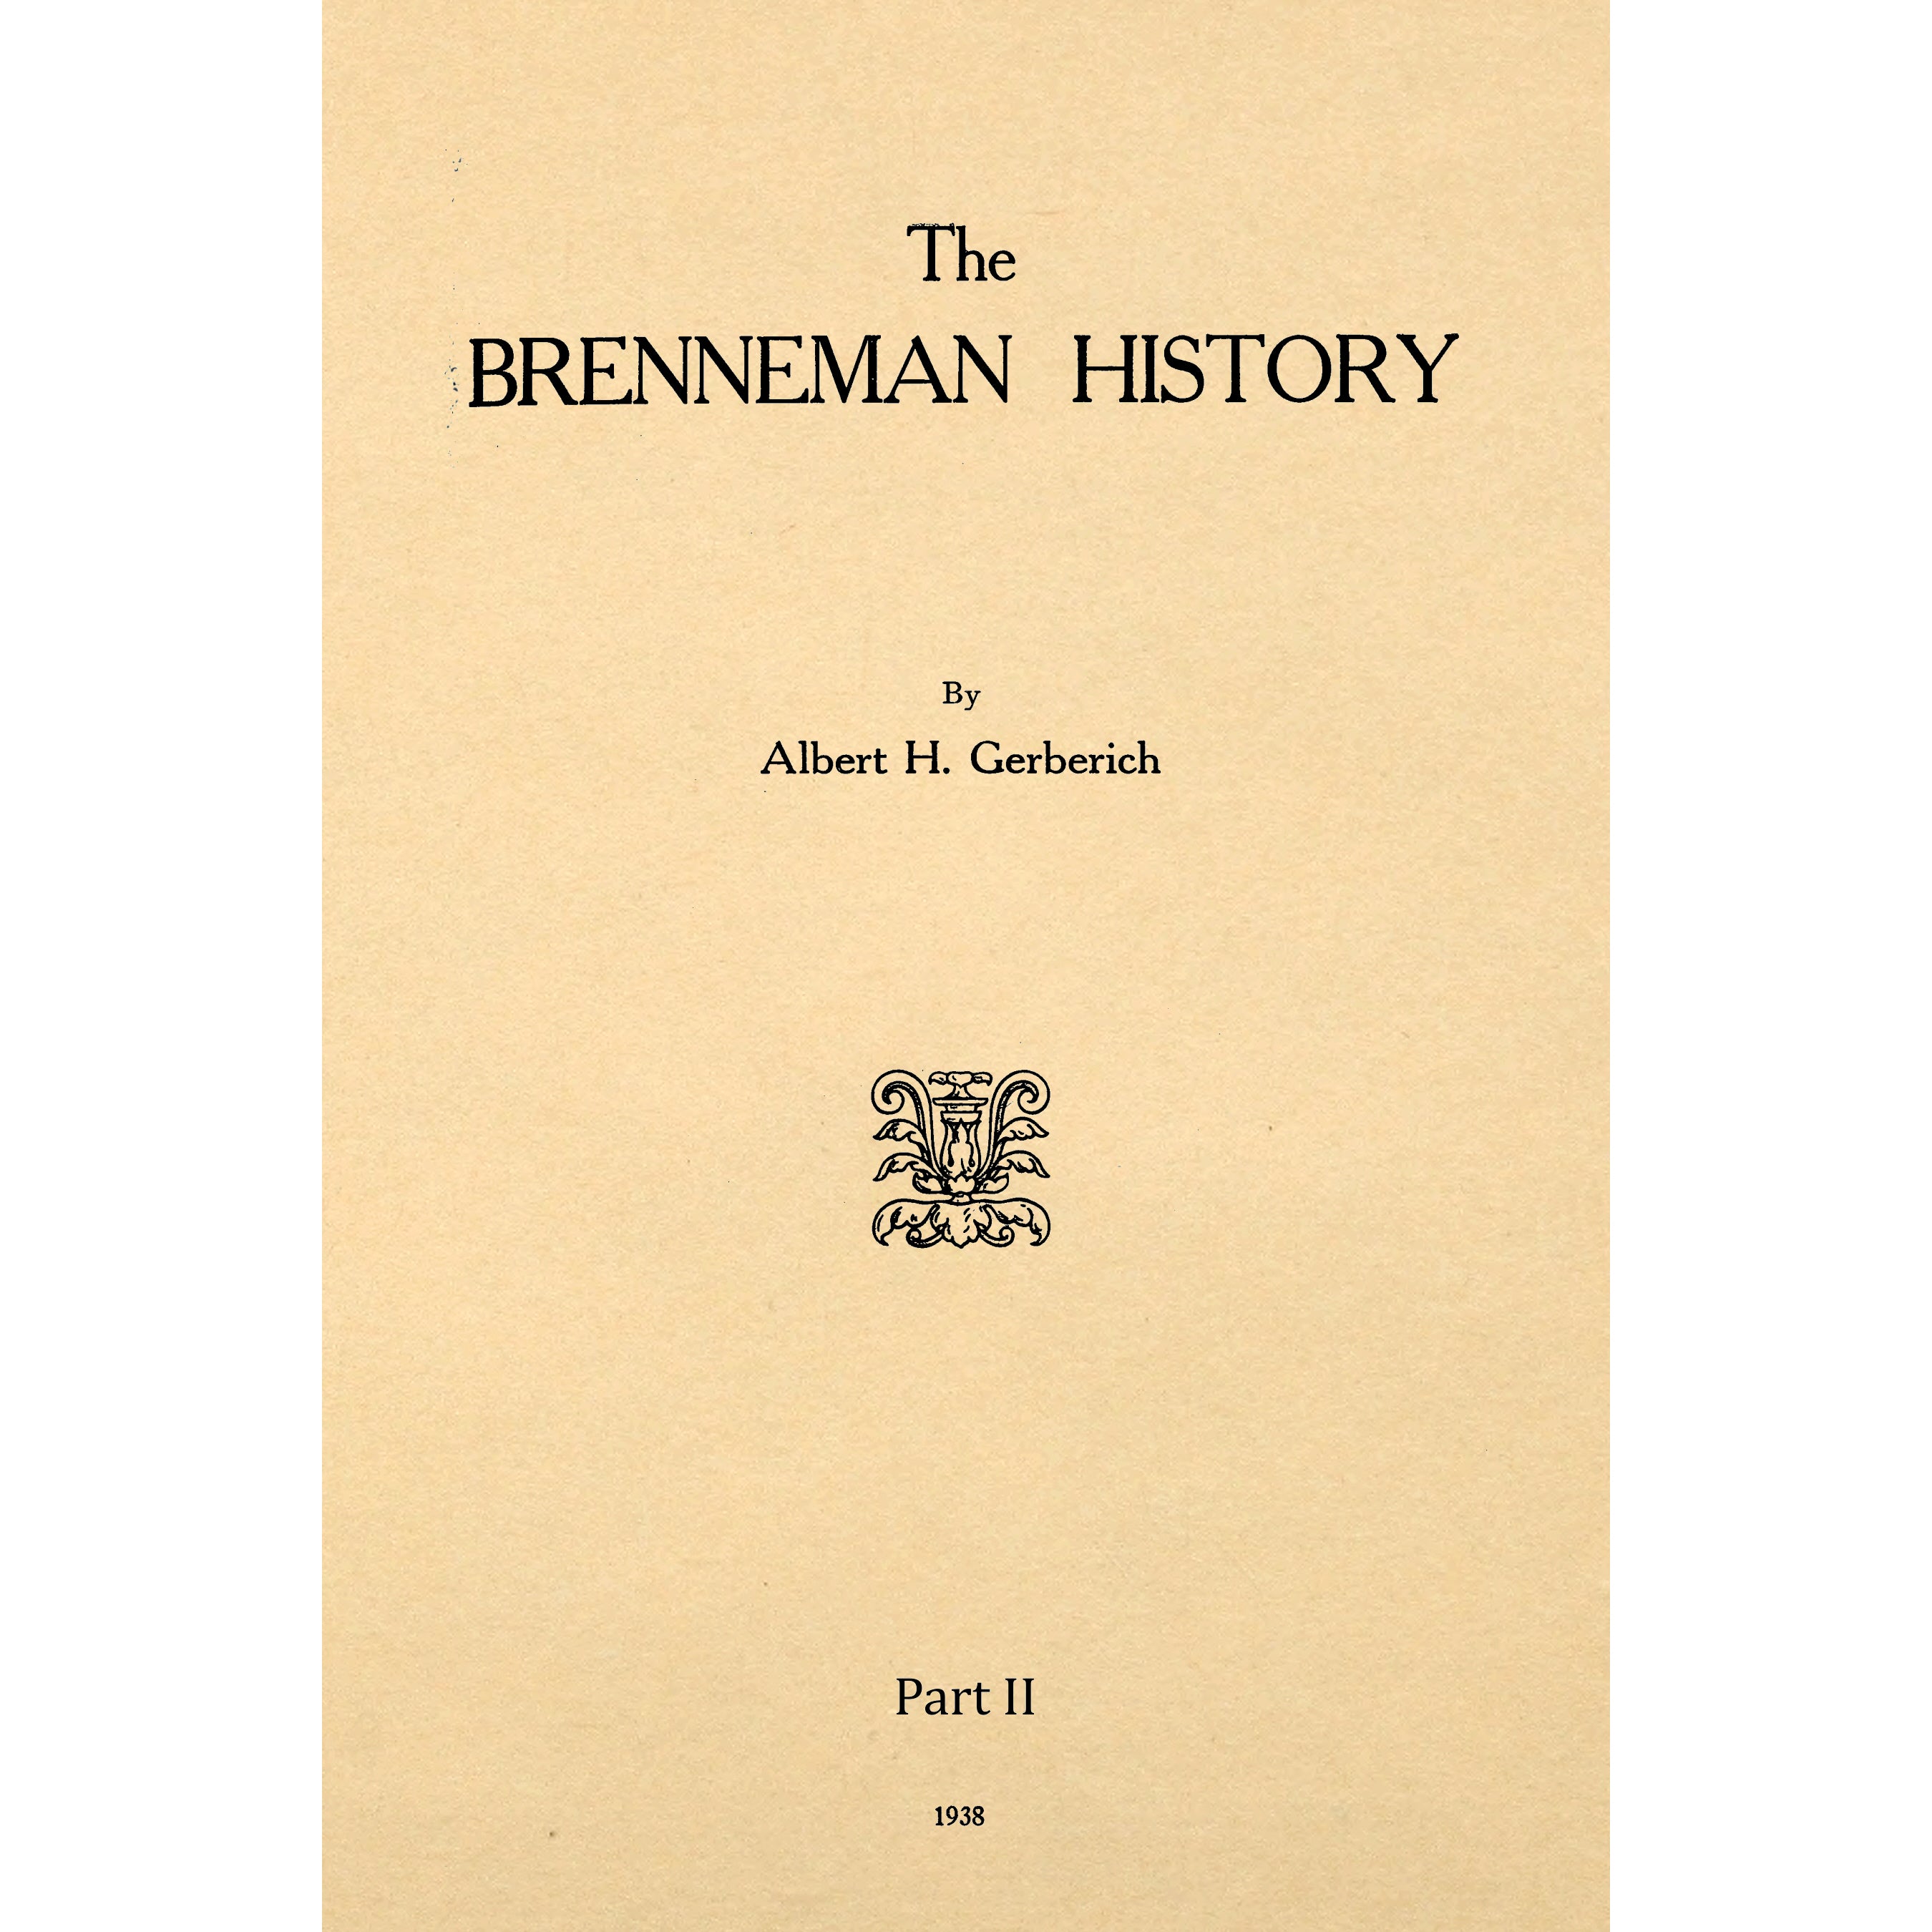 The Brenneman History